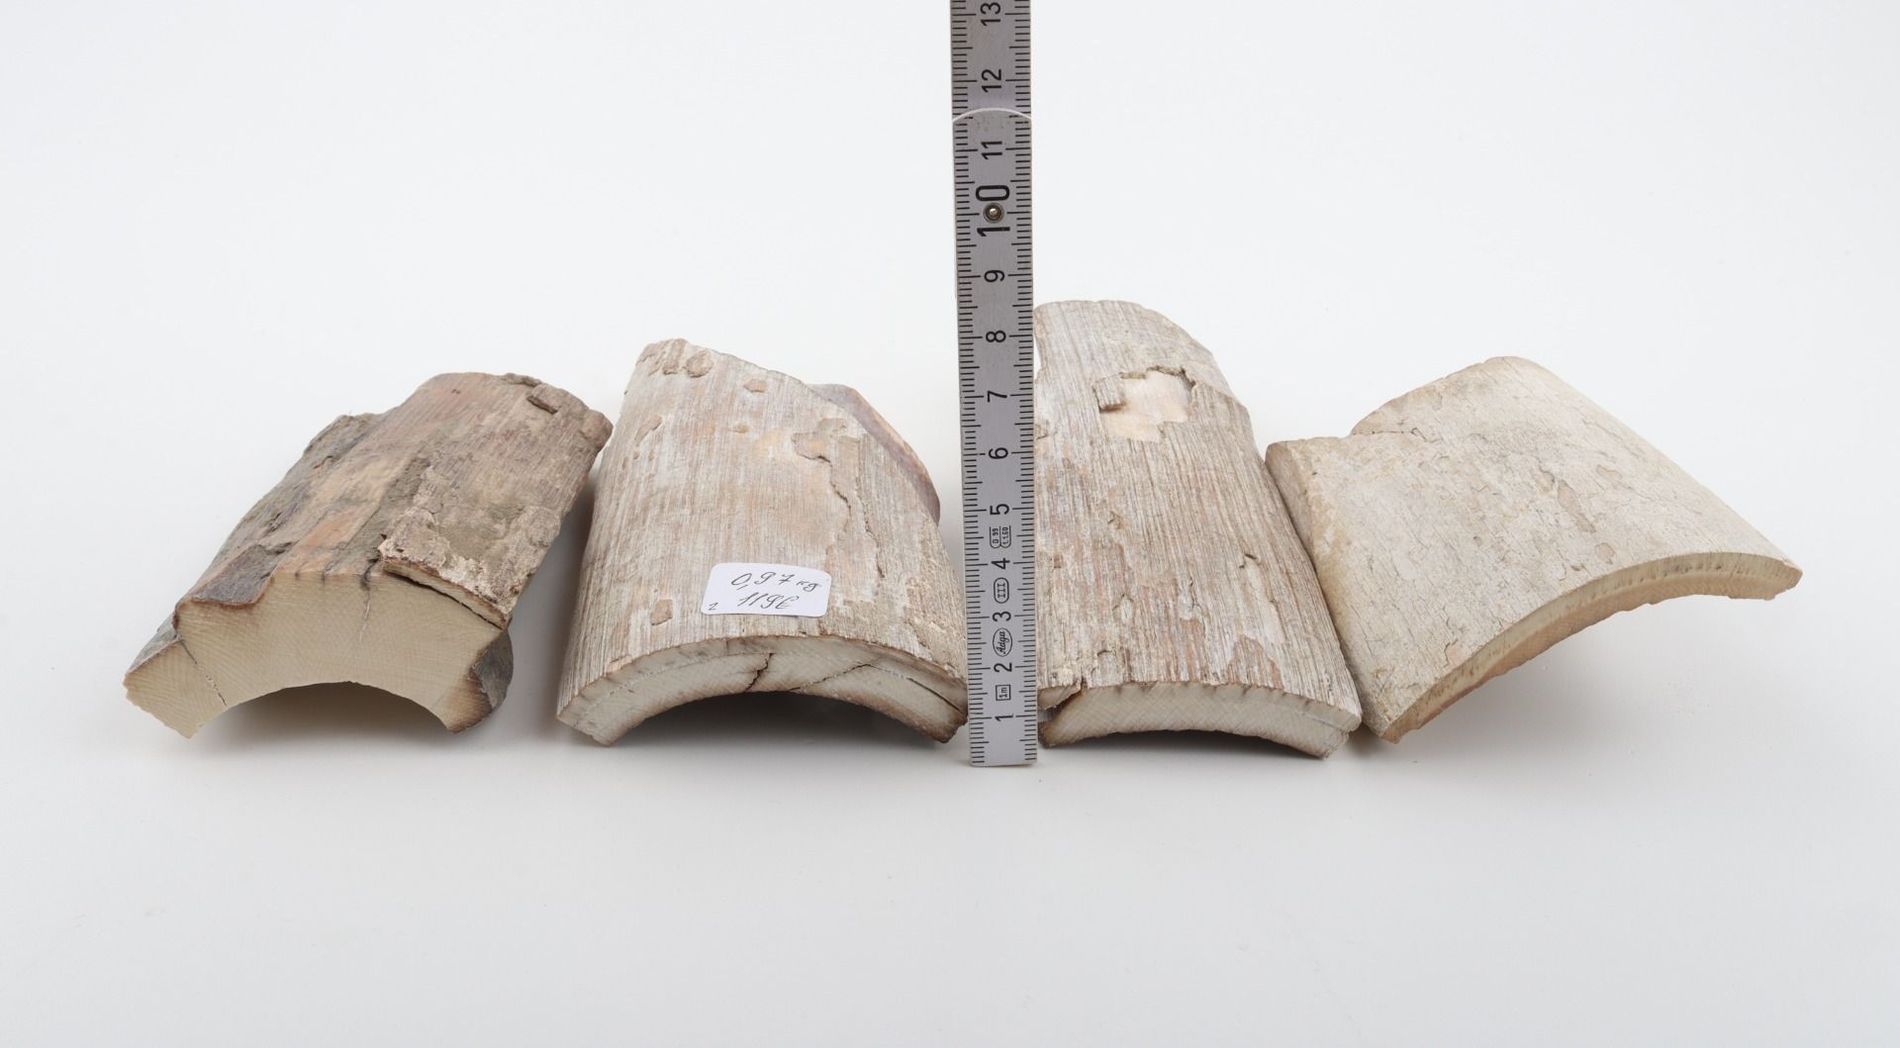 Raw mammoth ivory offcuts